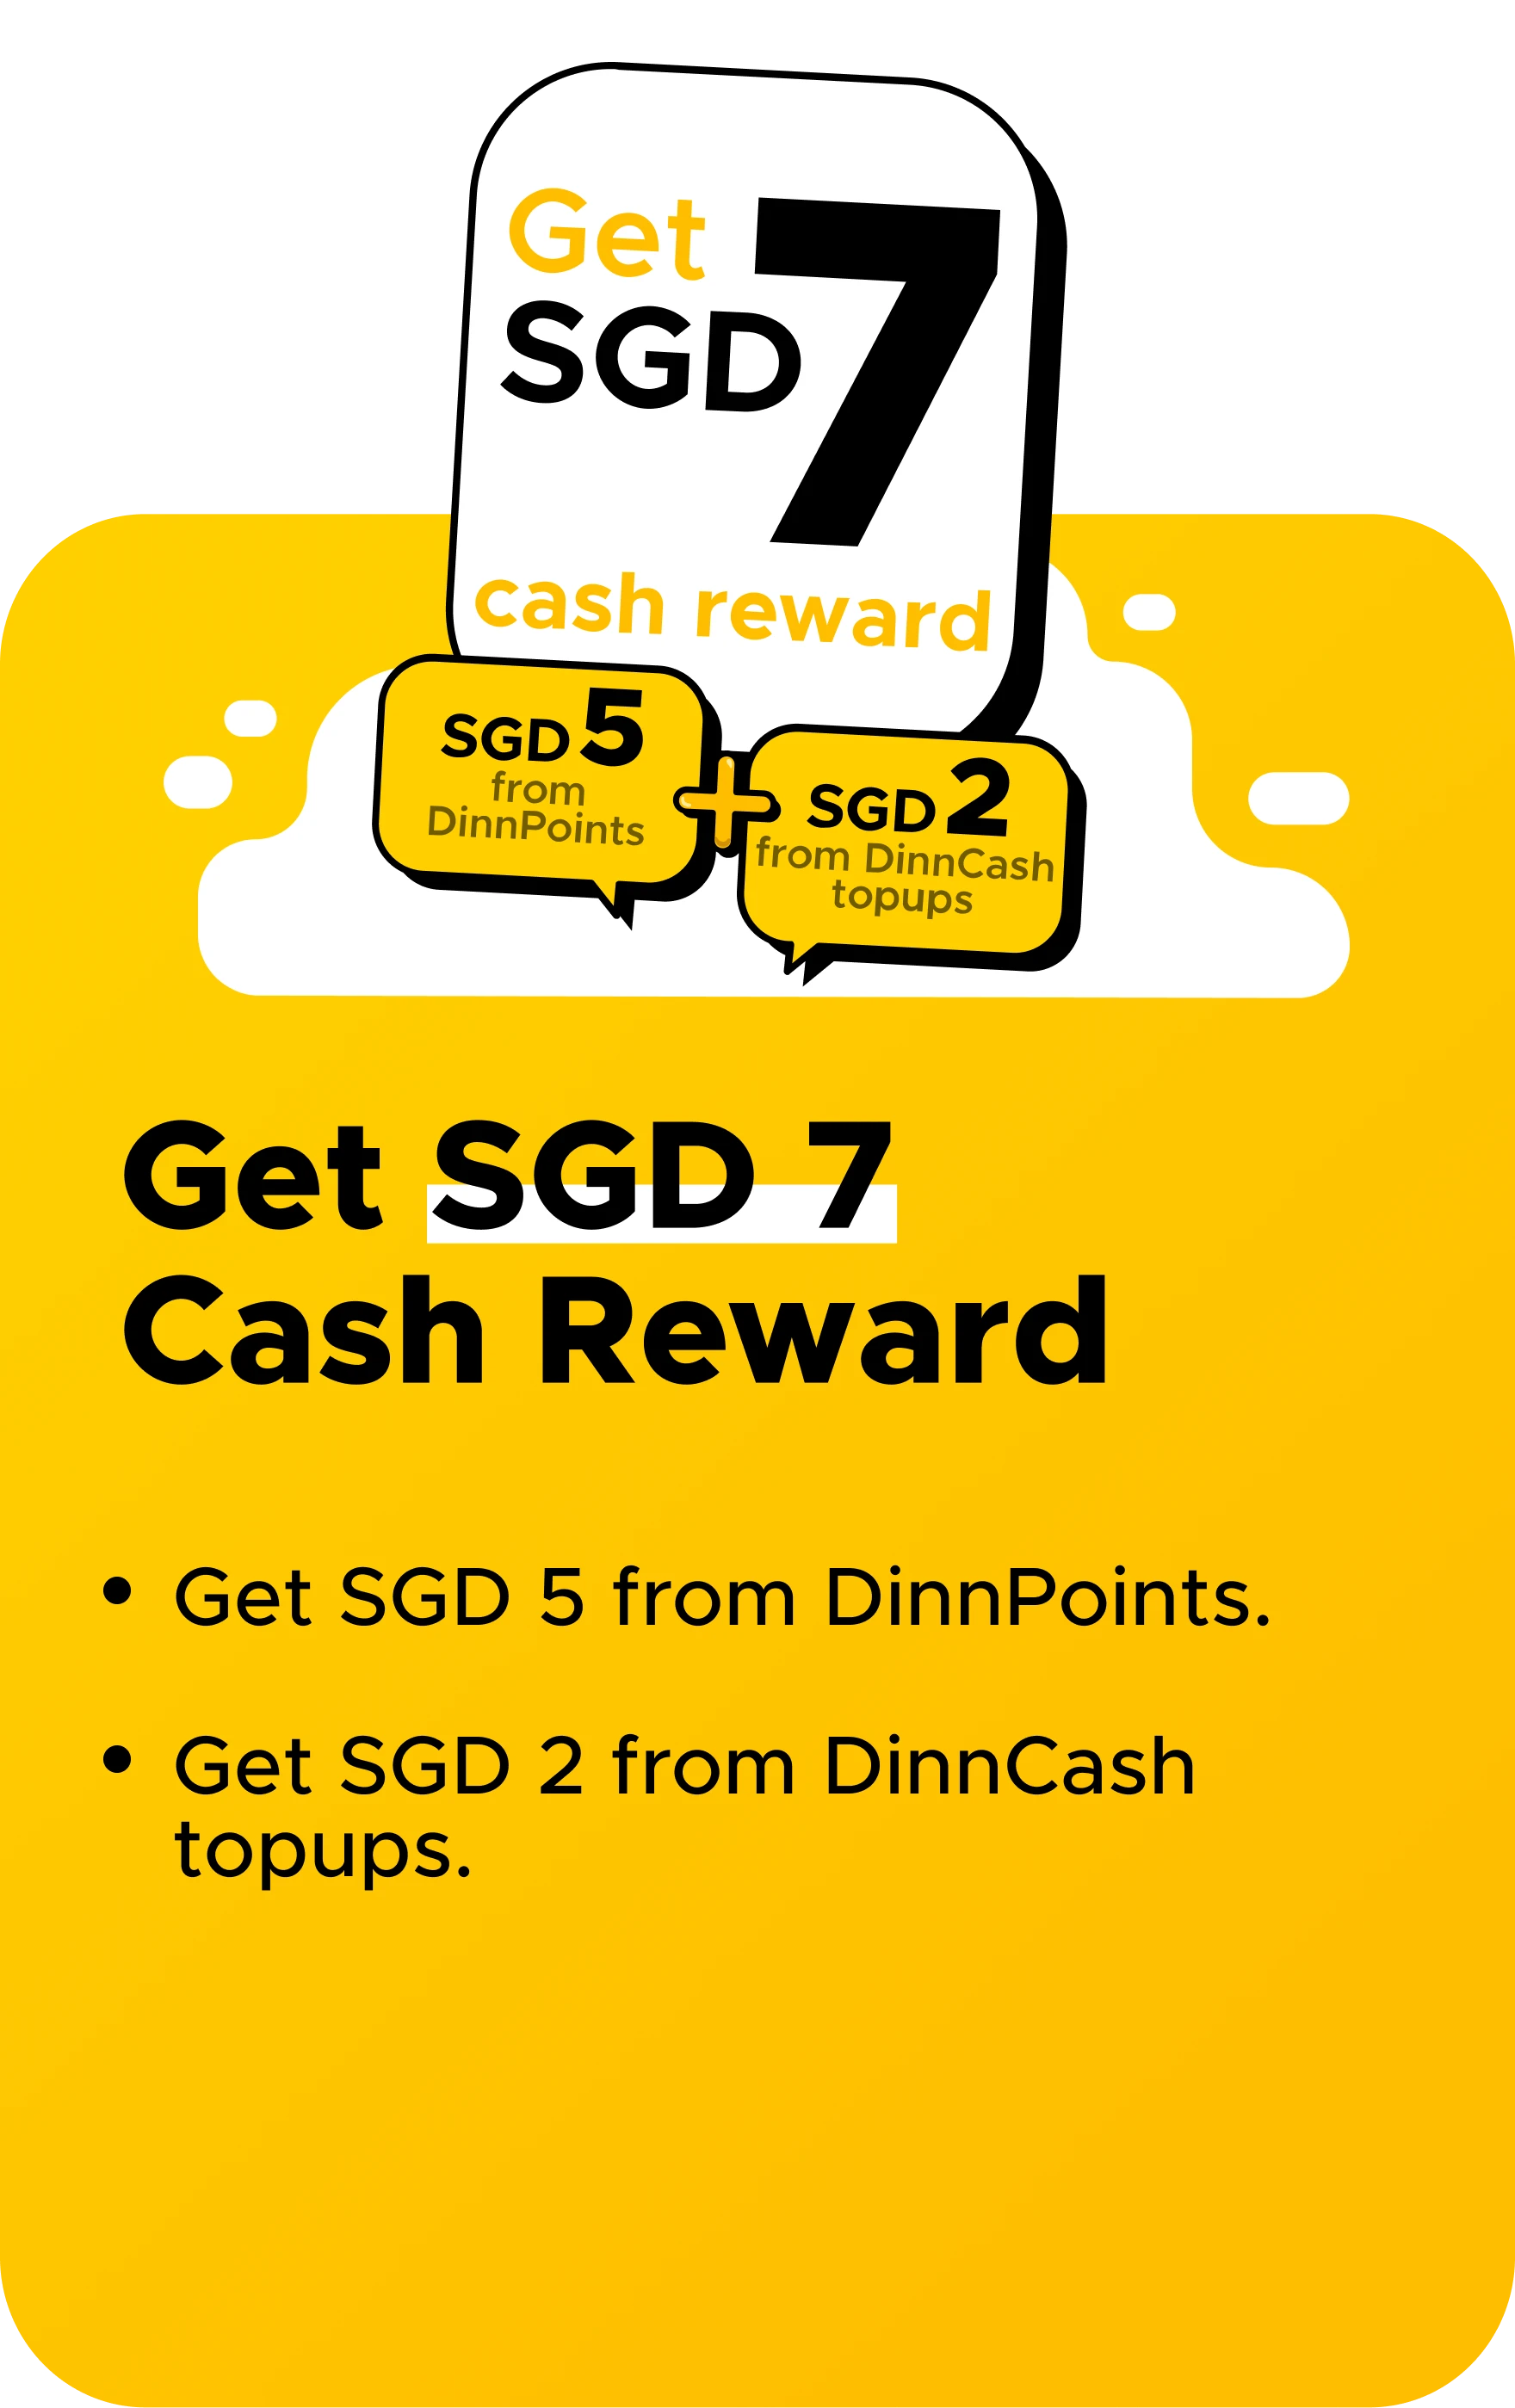 Get SGD 7 Cash Reward